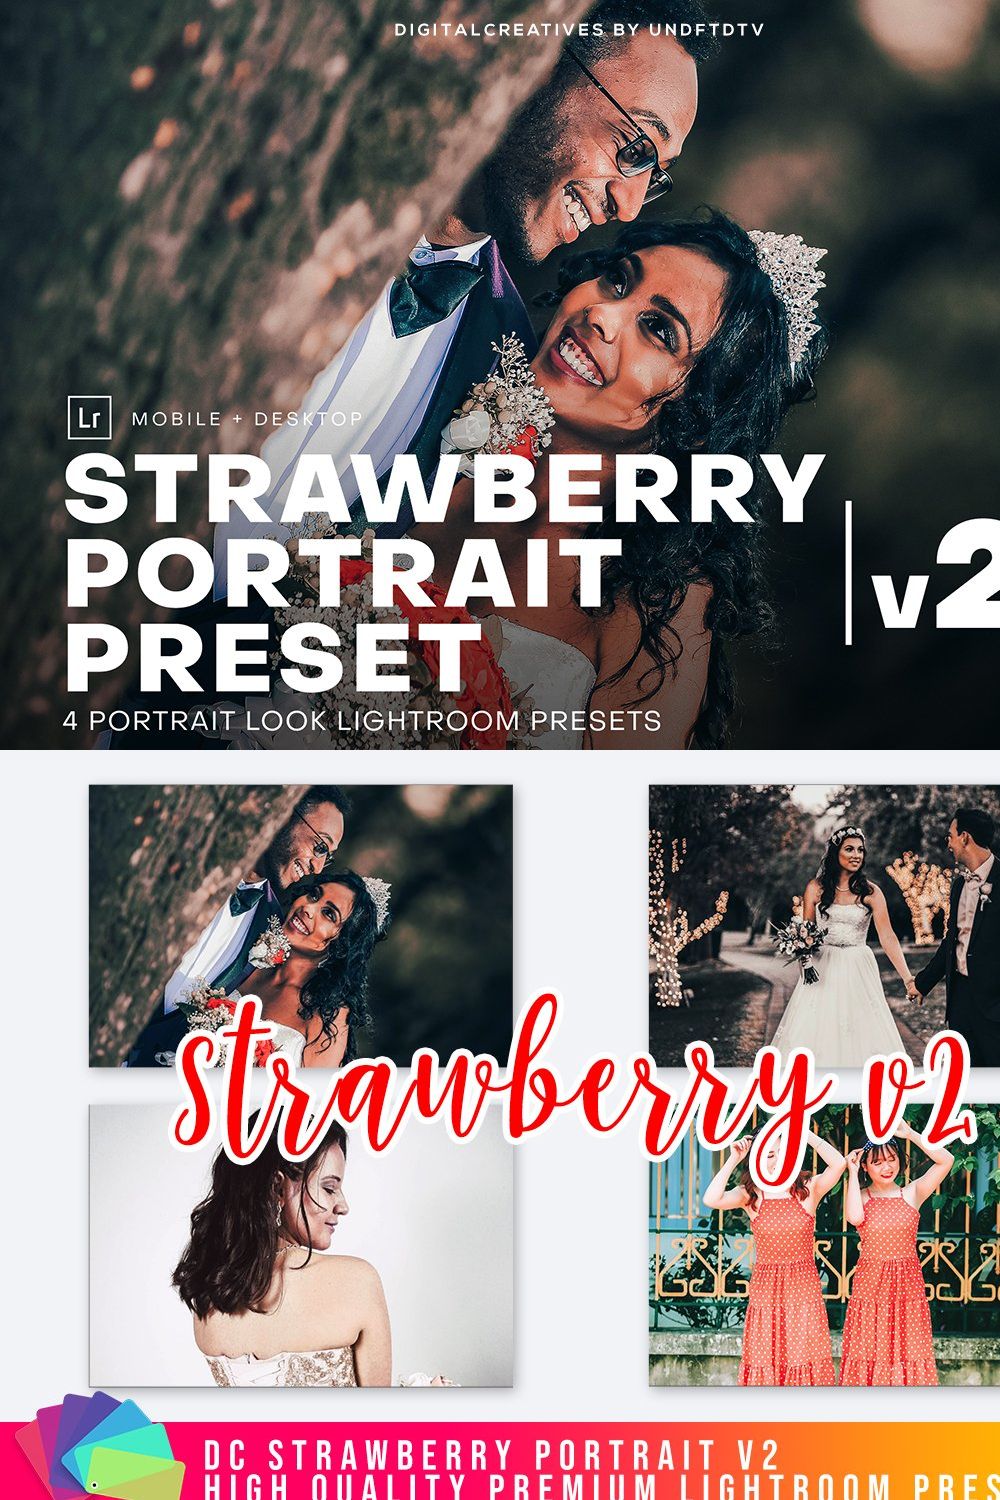 DC Strawberry Portrait Lightroom pinterest preview image.